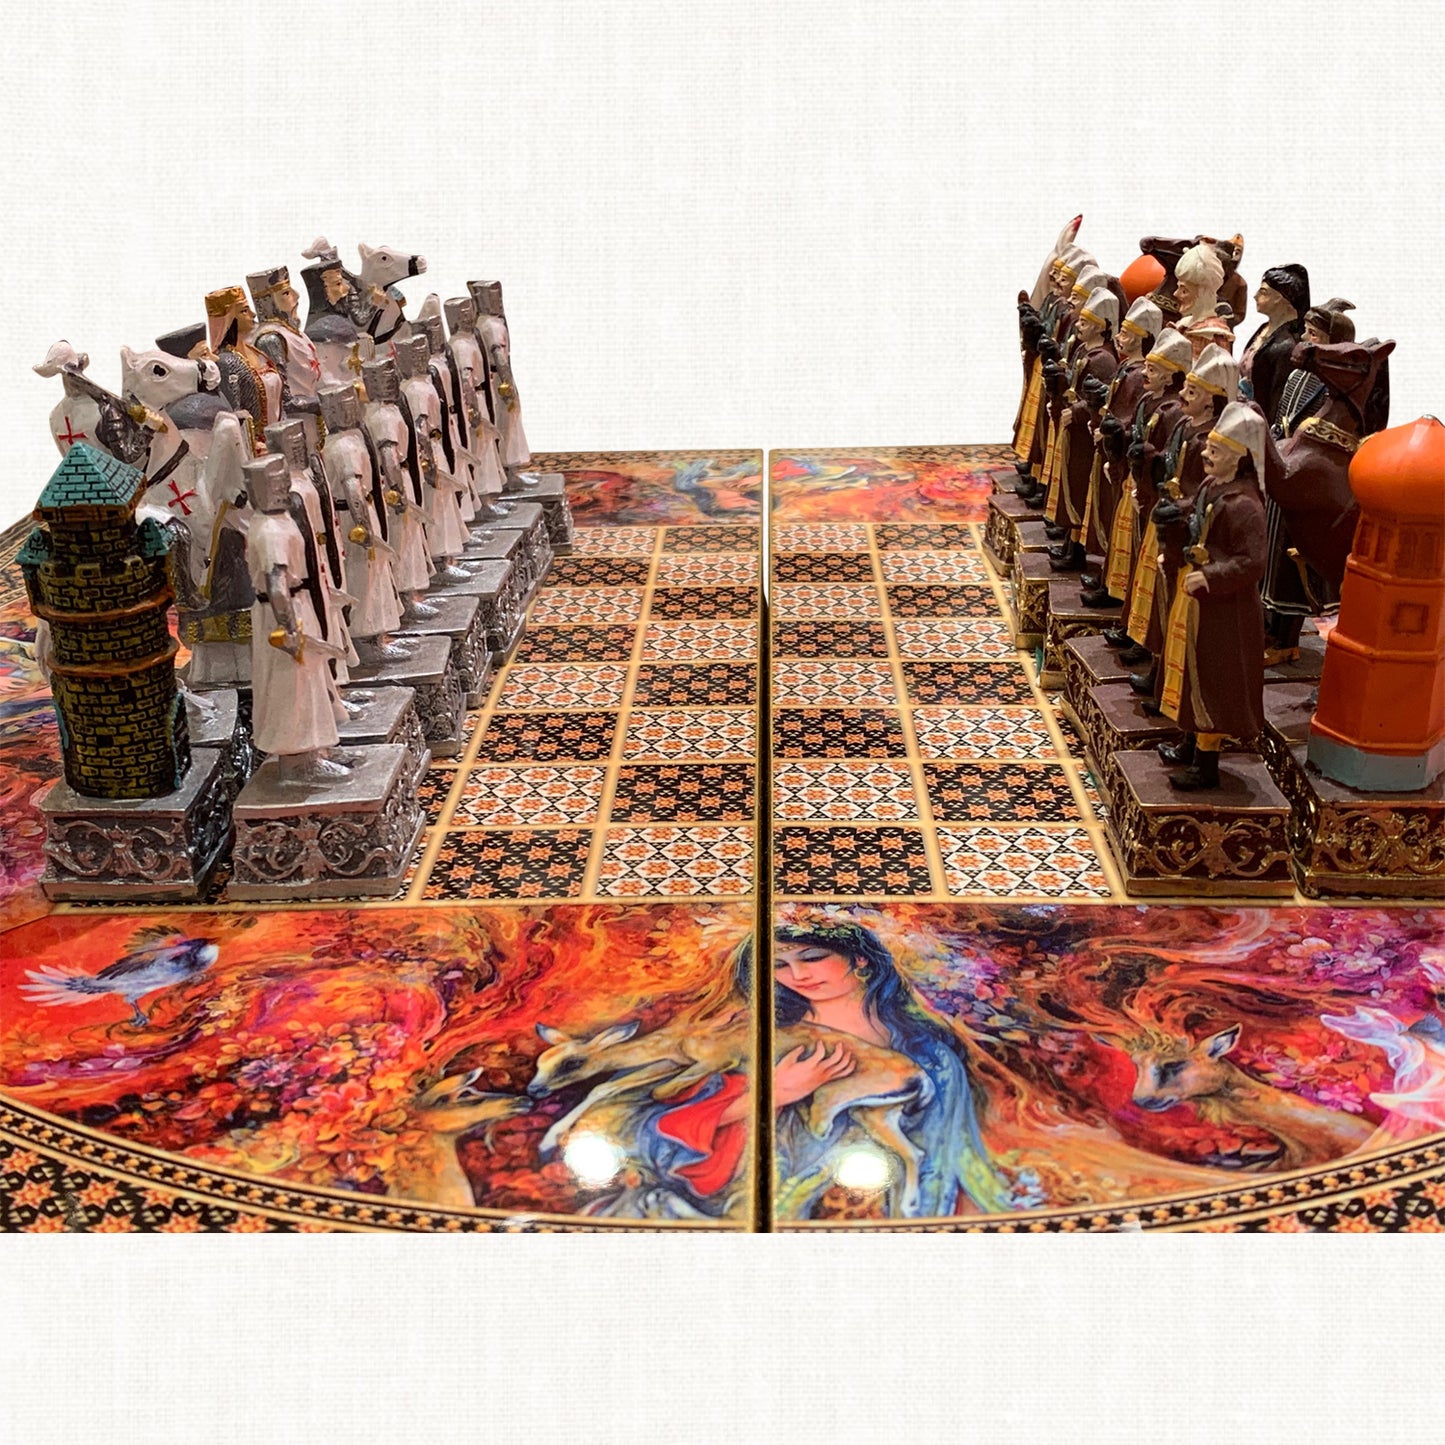 War of England Ottoman Empire Chess